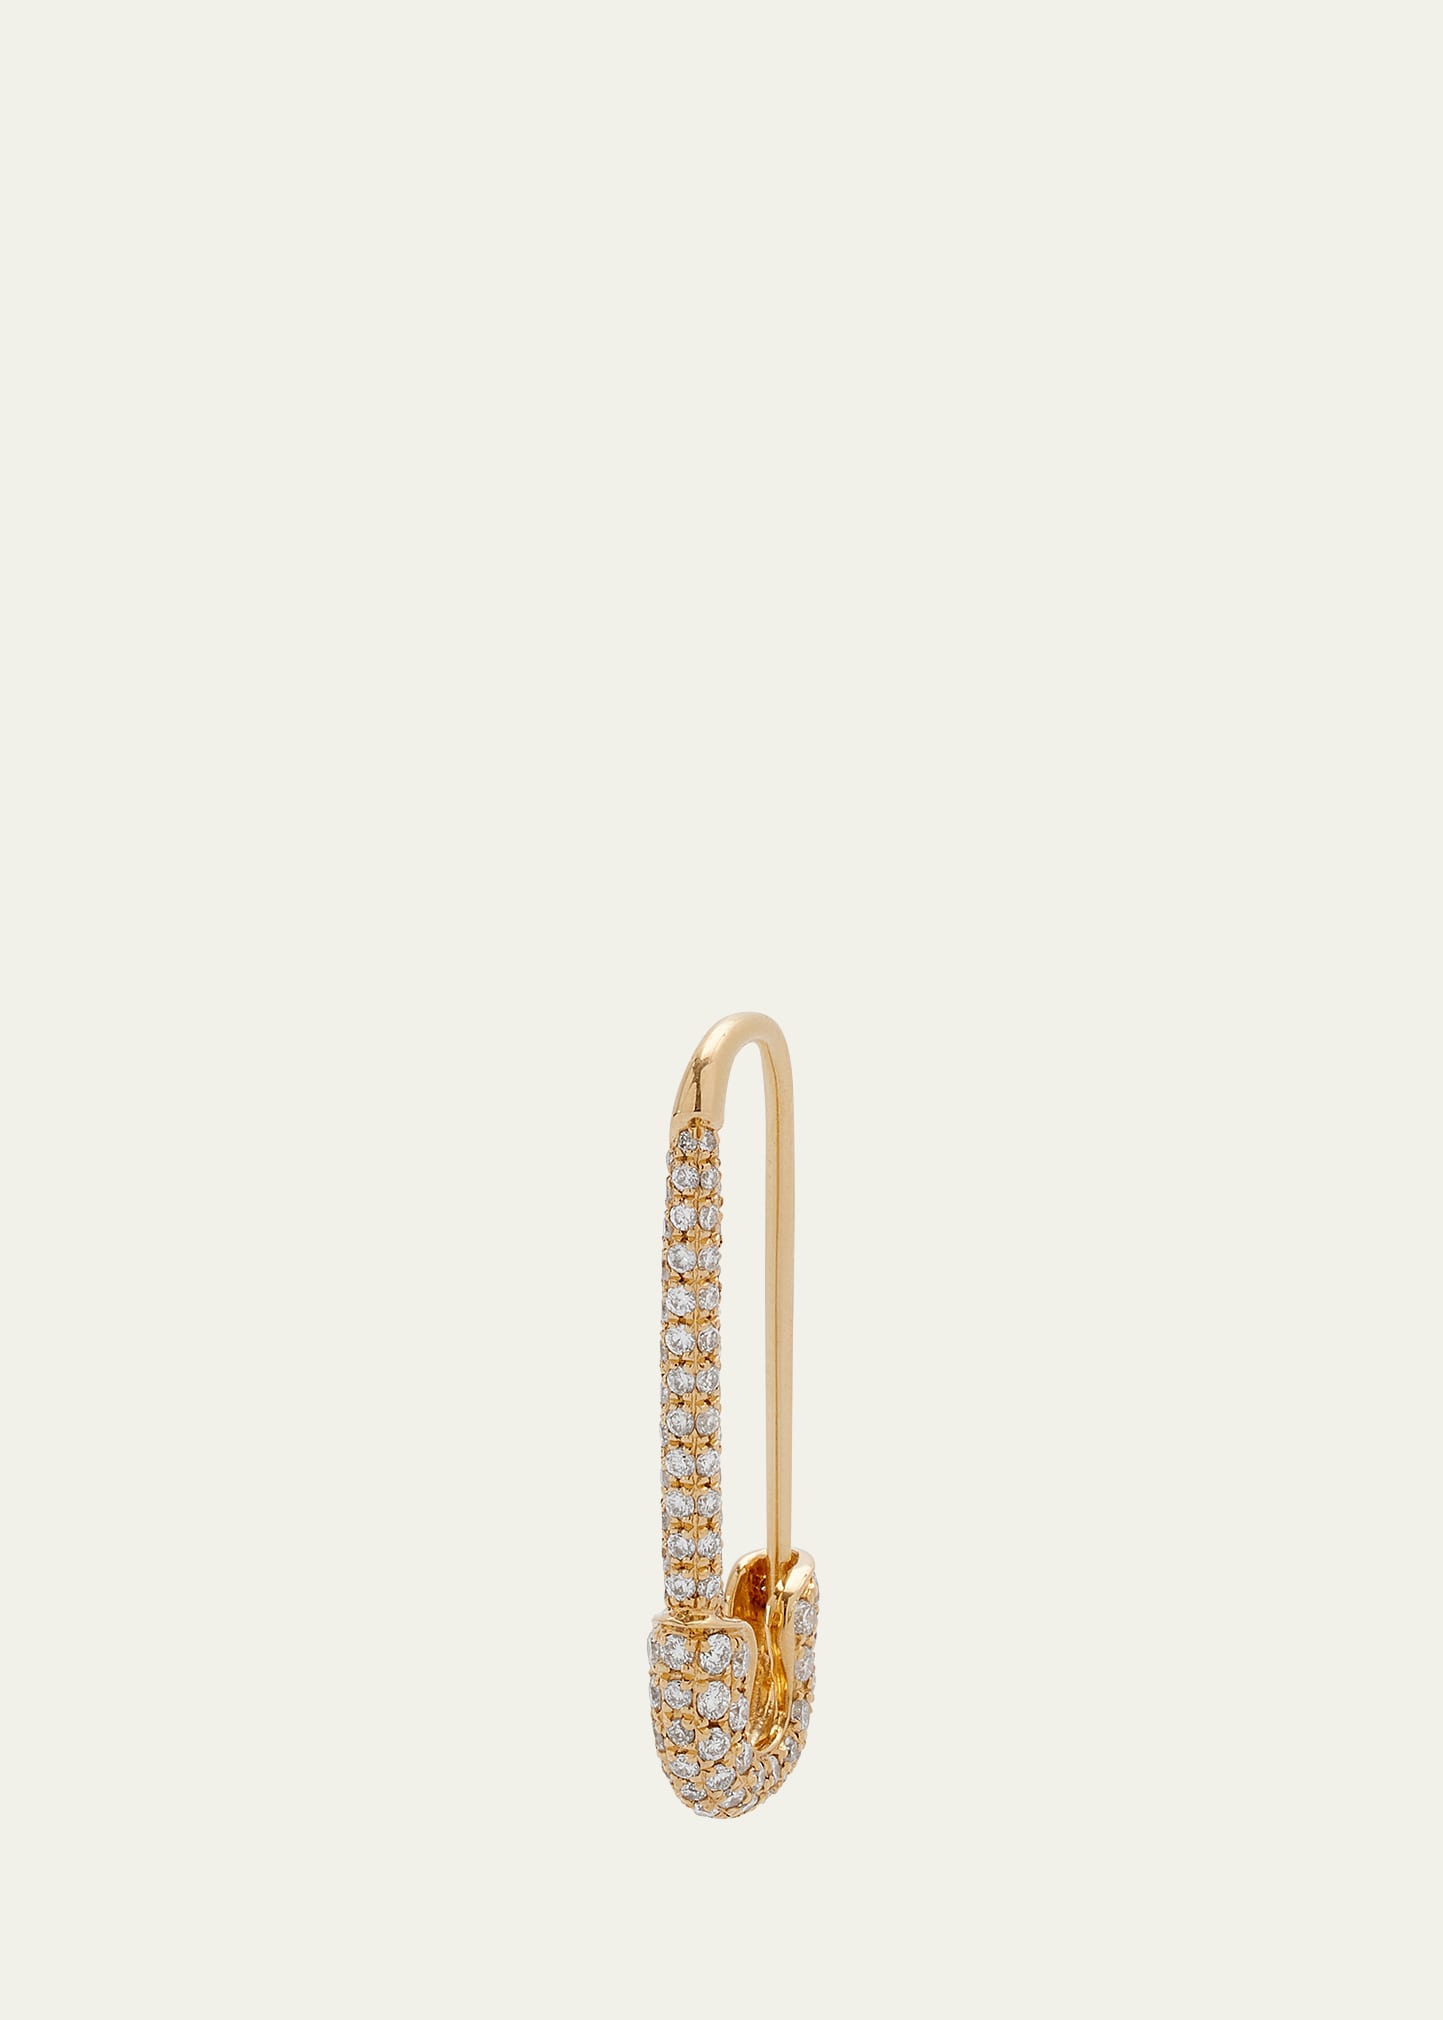 Anita Ko 18K Yellow Gold Diamond Pave Safety Pin Earring, Single, Left